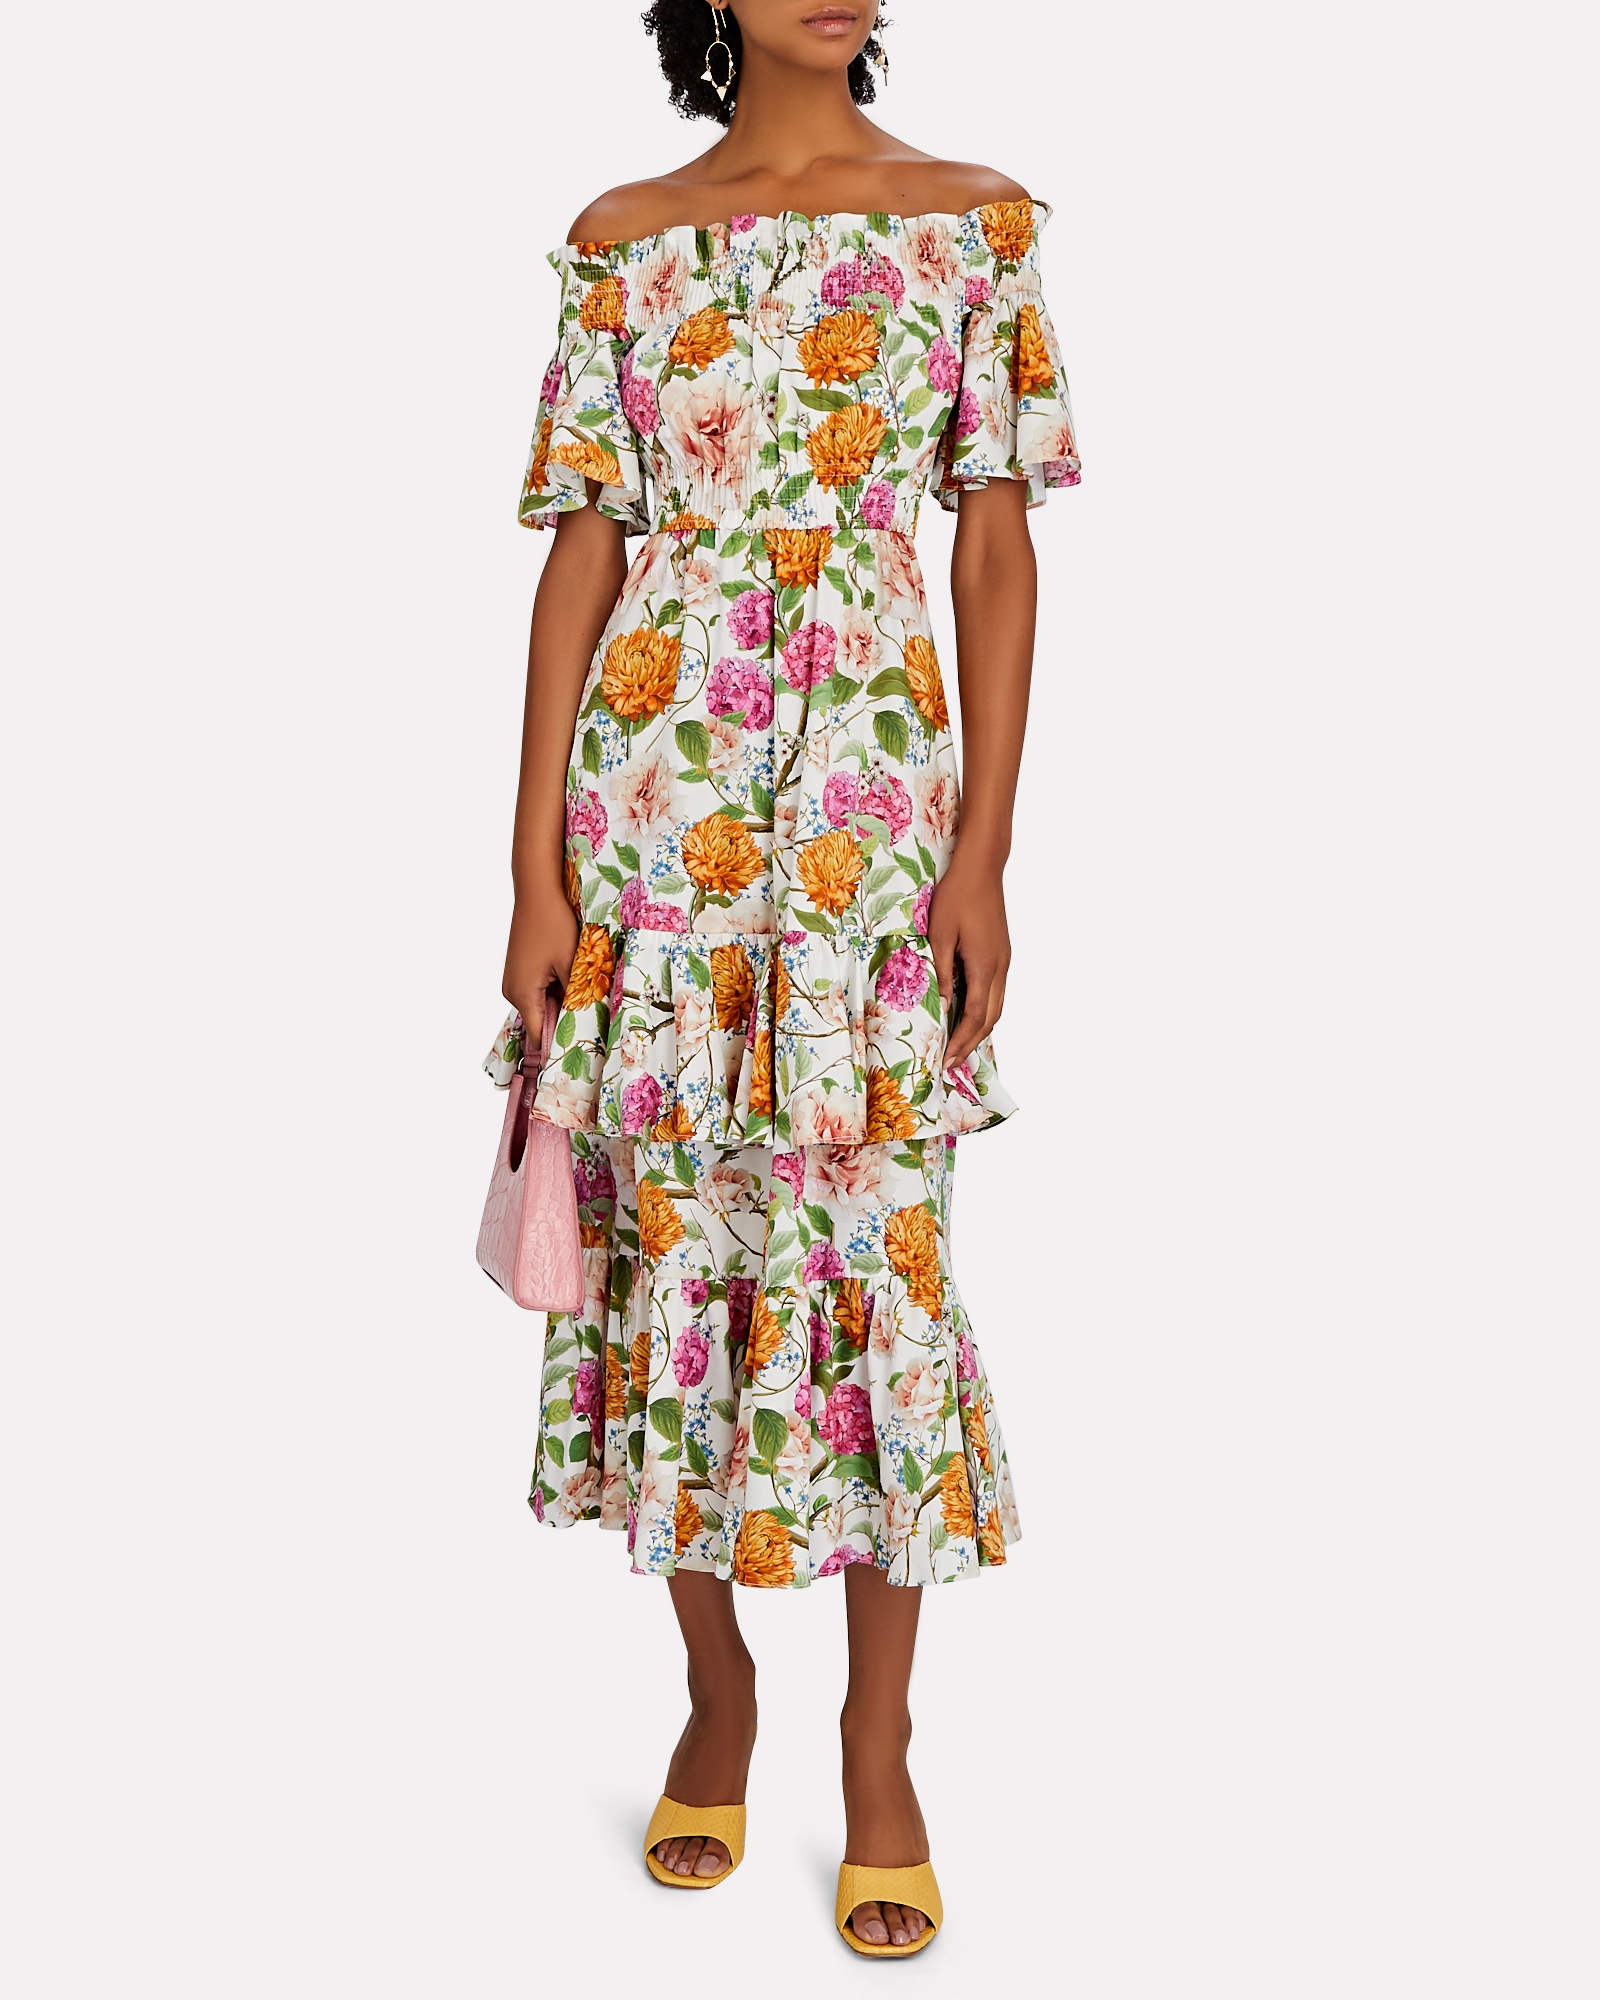 Borgo De Nor Margarita Off-the-Shoulder Floral Cotton Dress | INTERMIX®